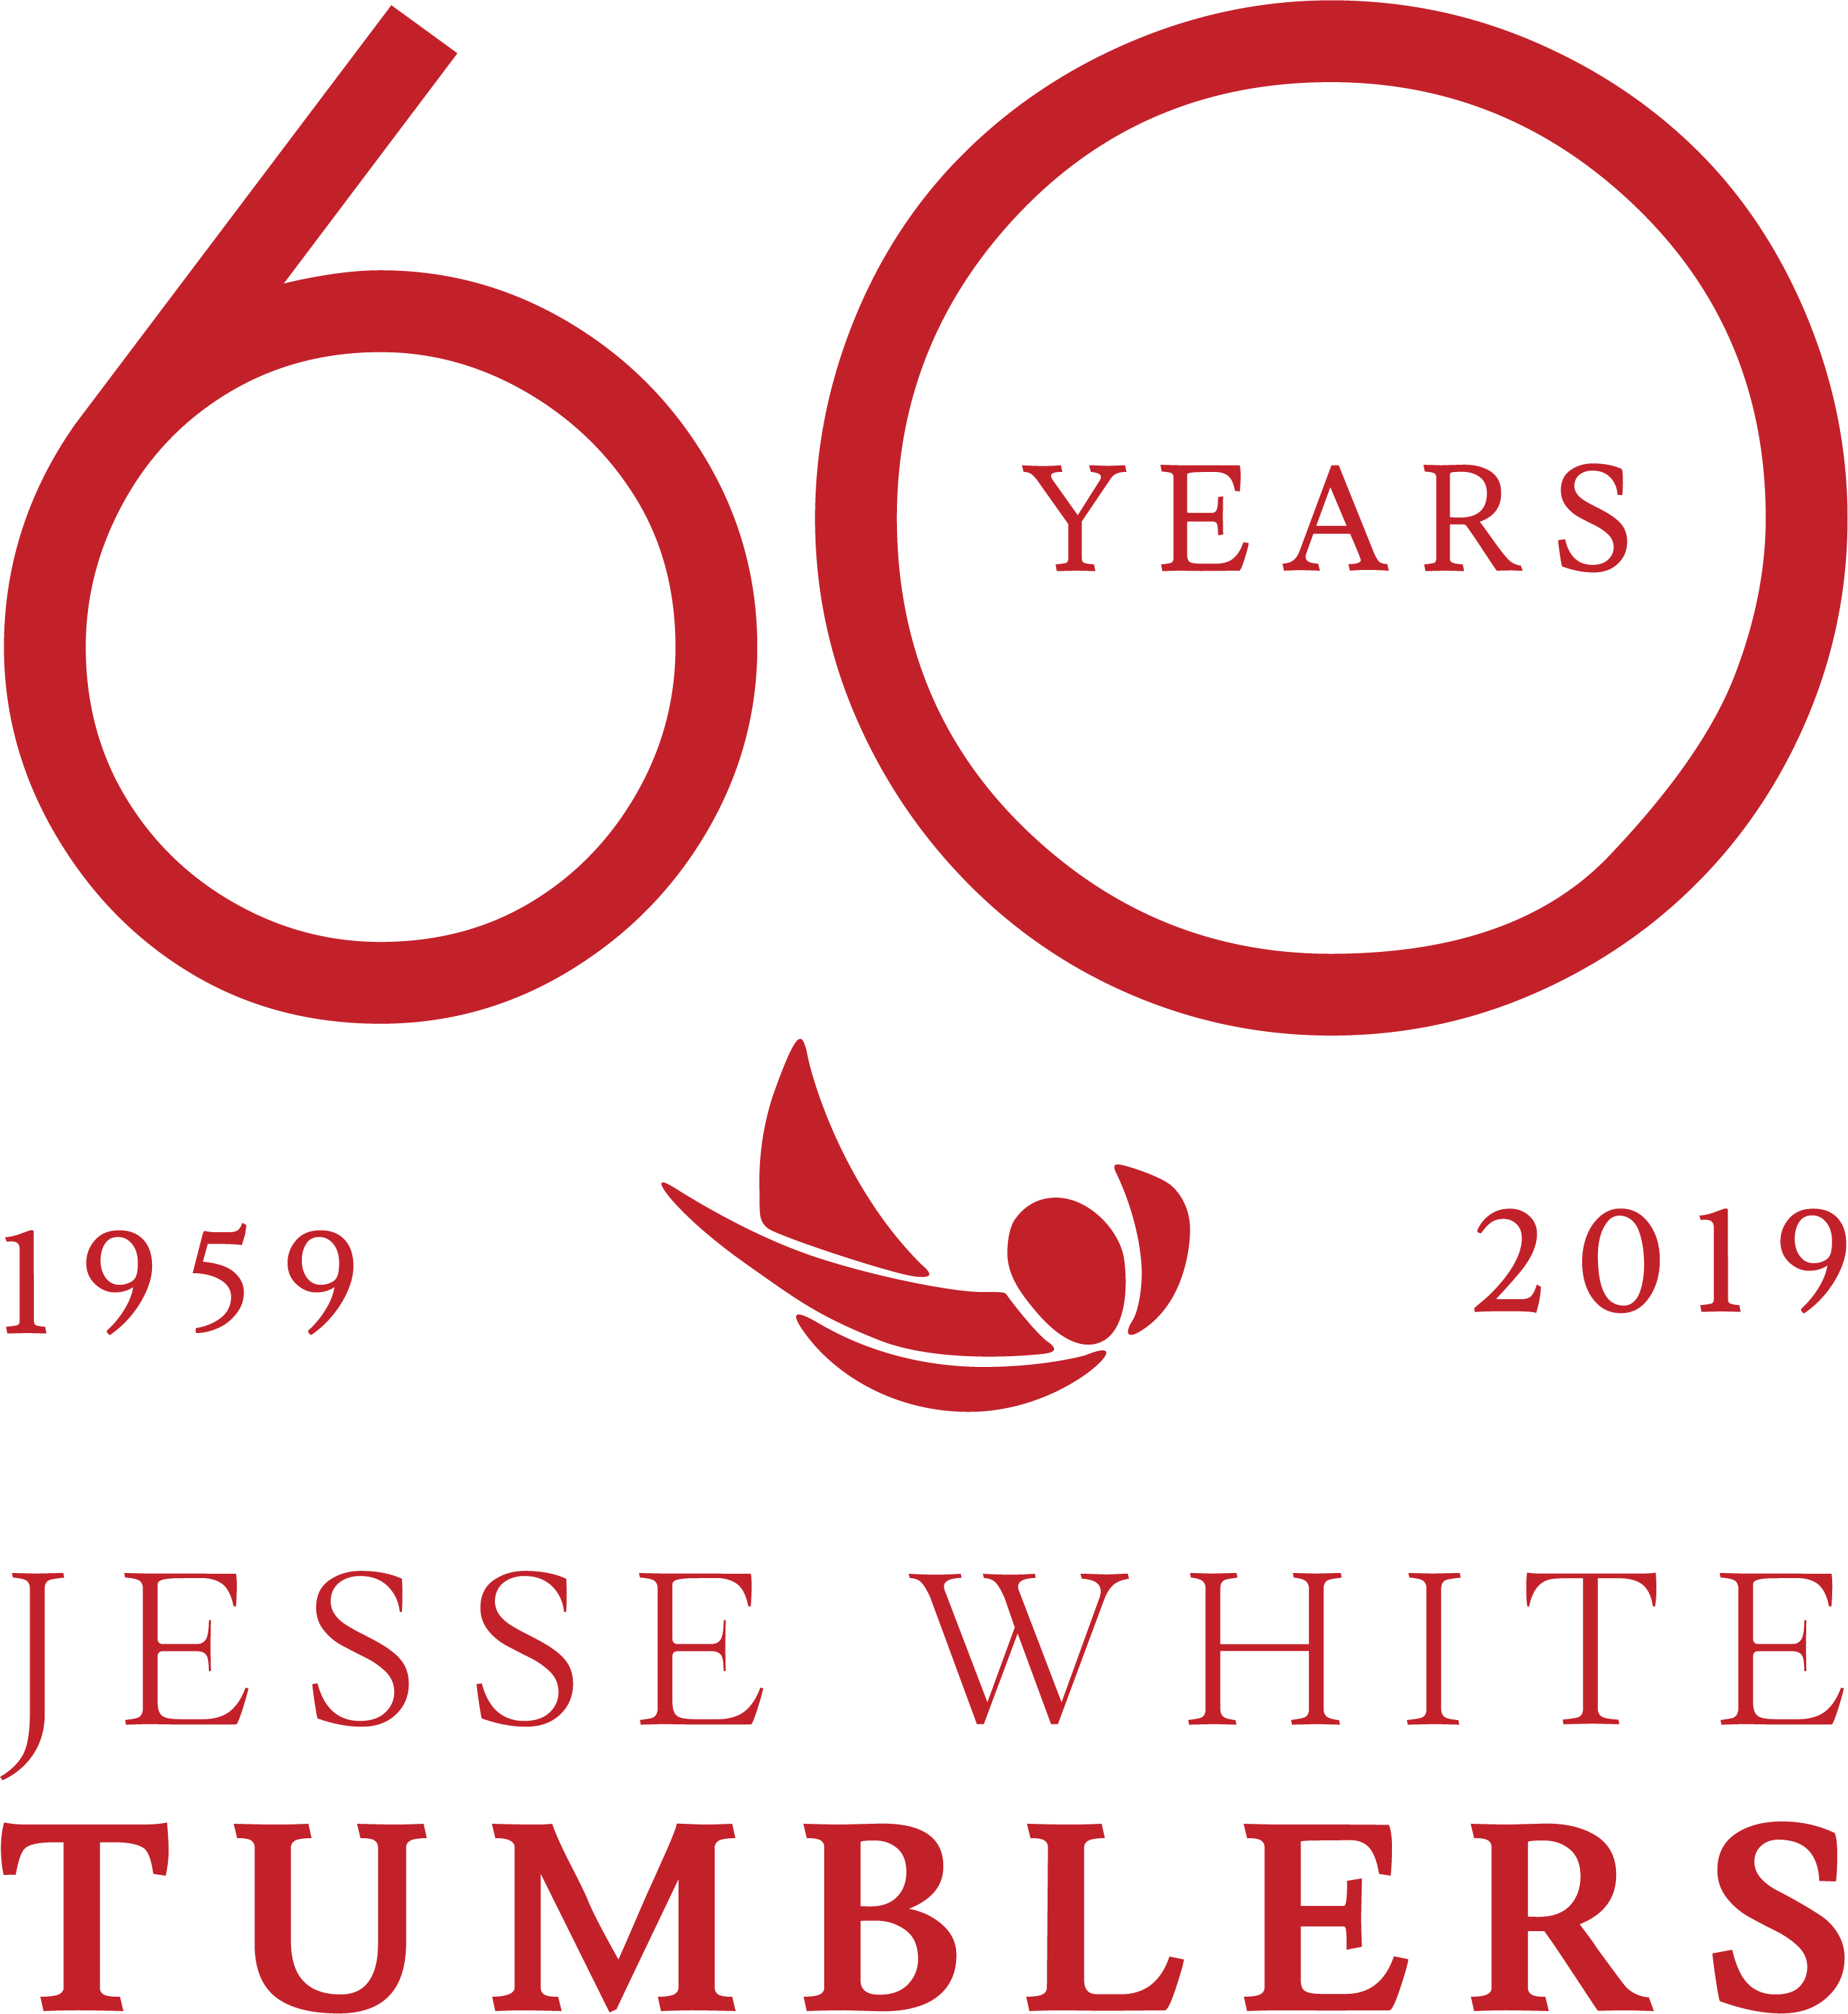 Jesse White Tumblers